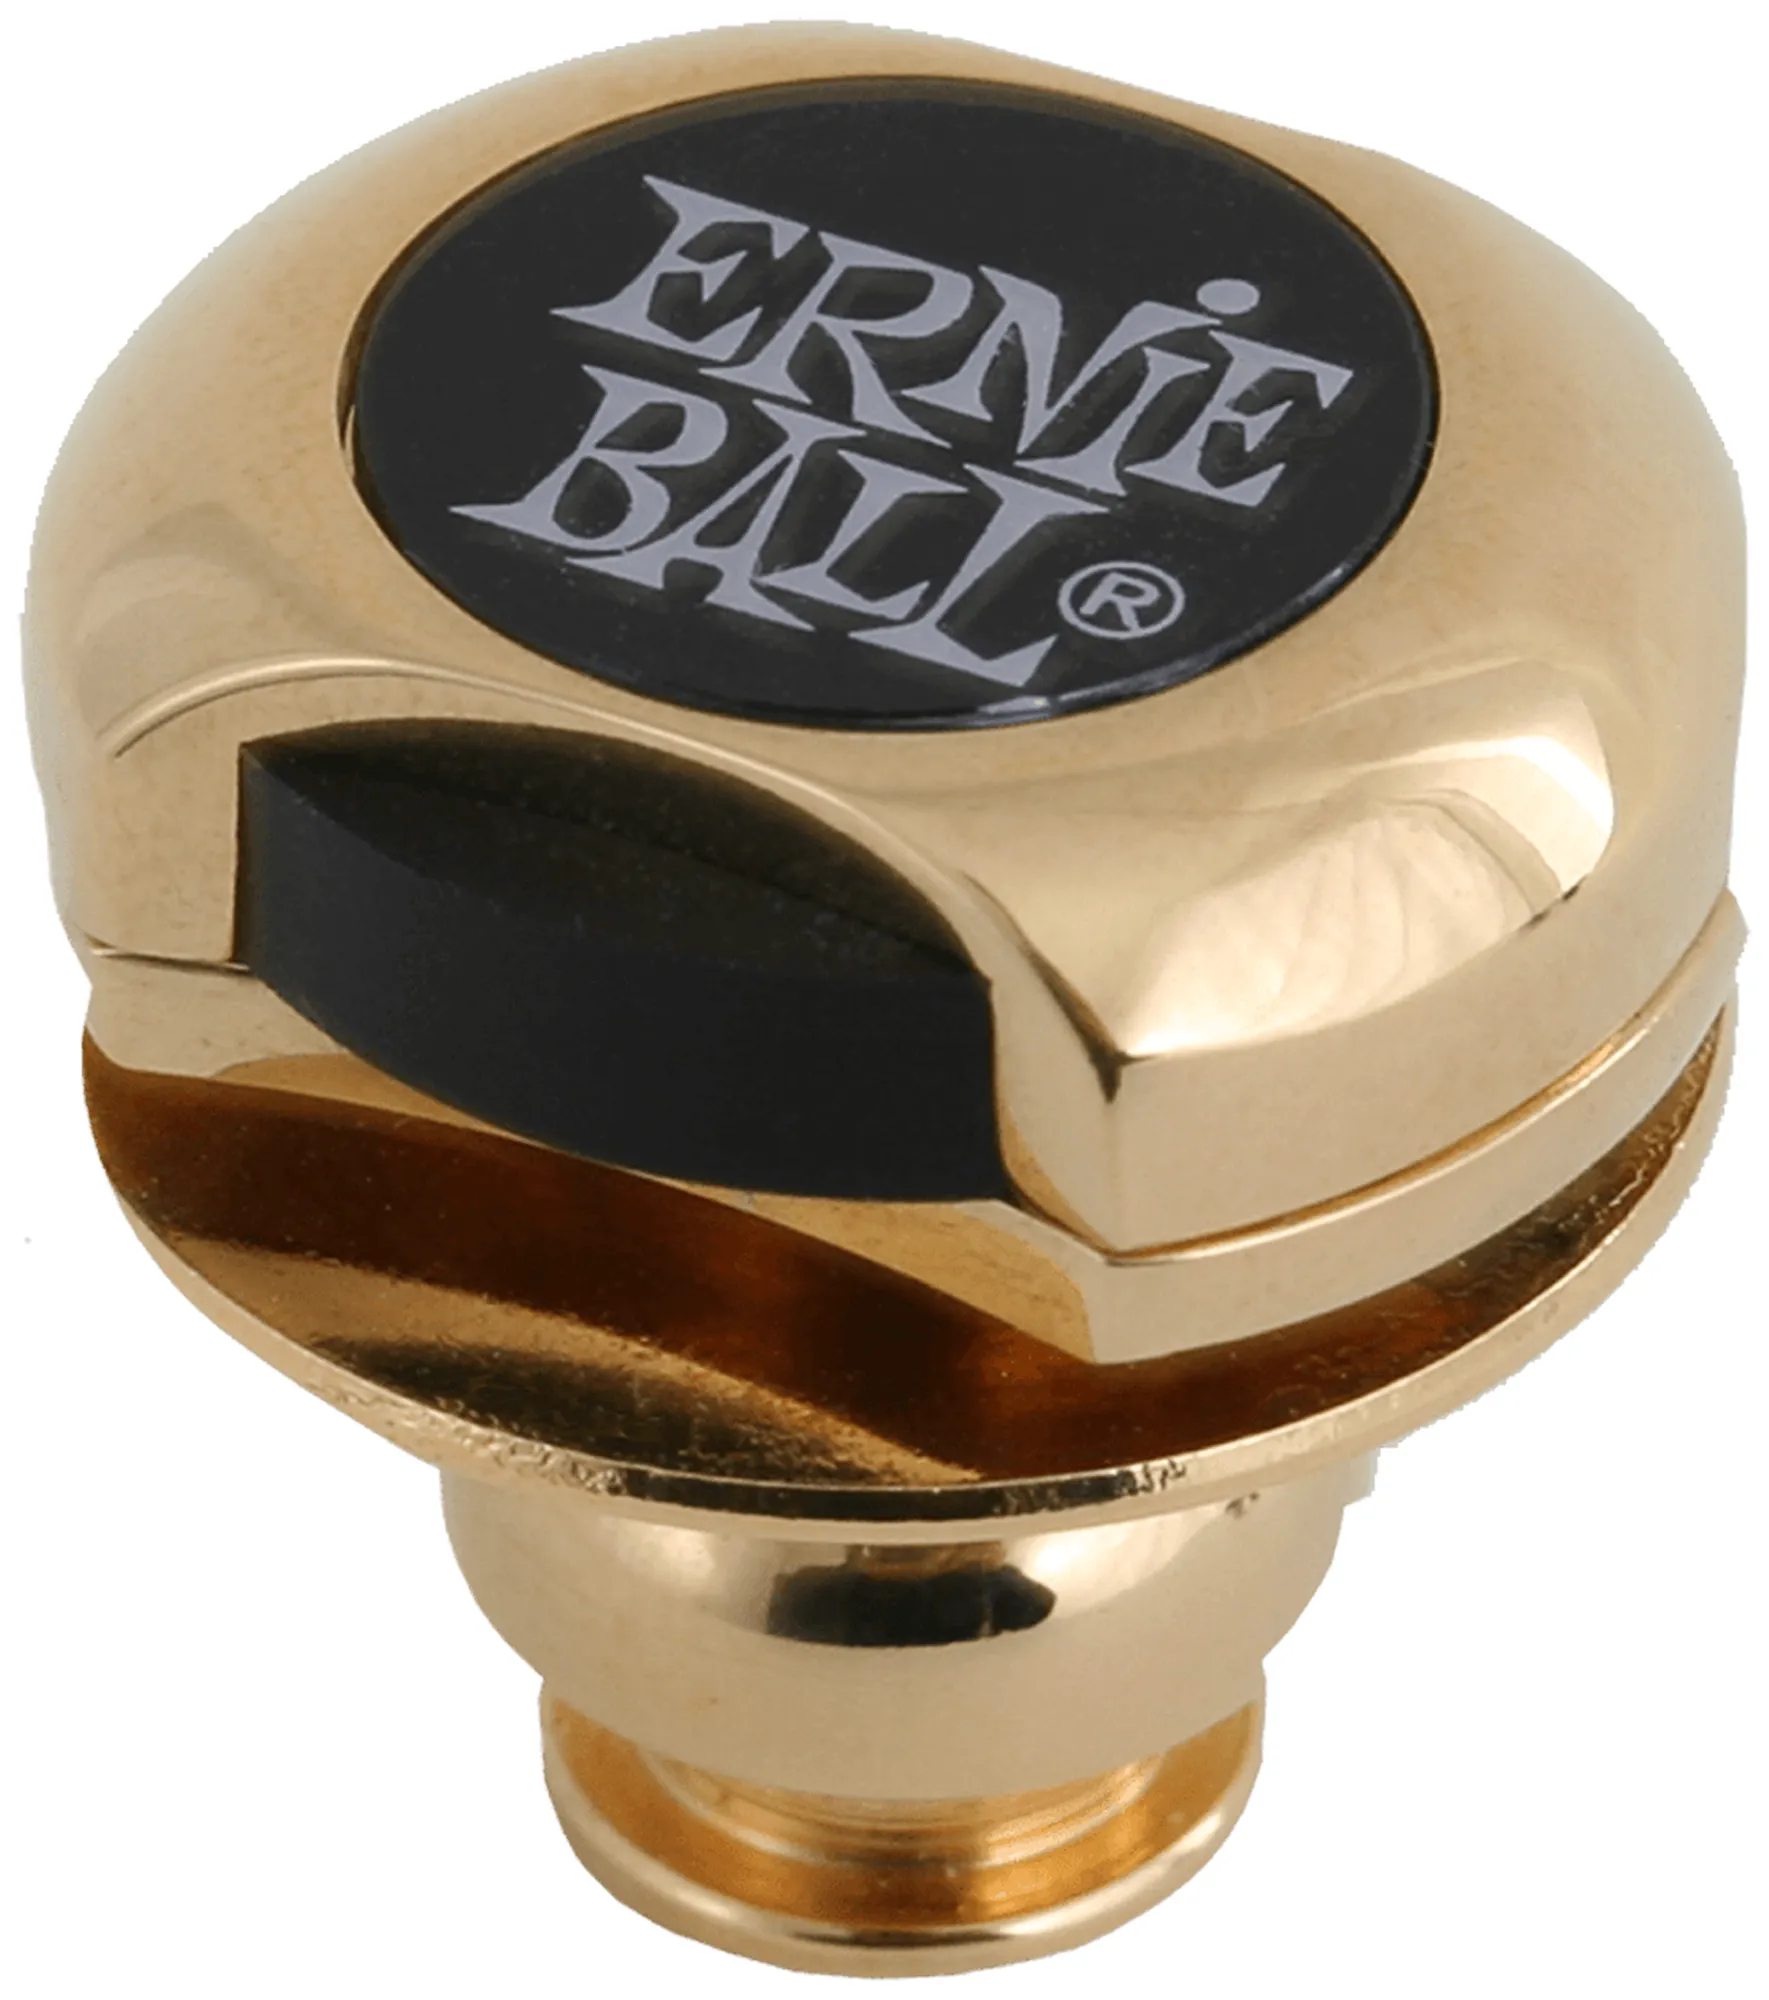 EB4602 Strap Locks Gold